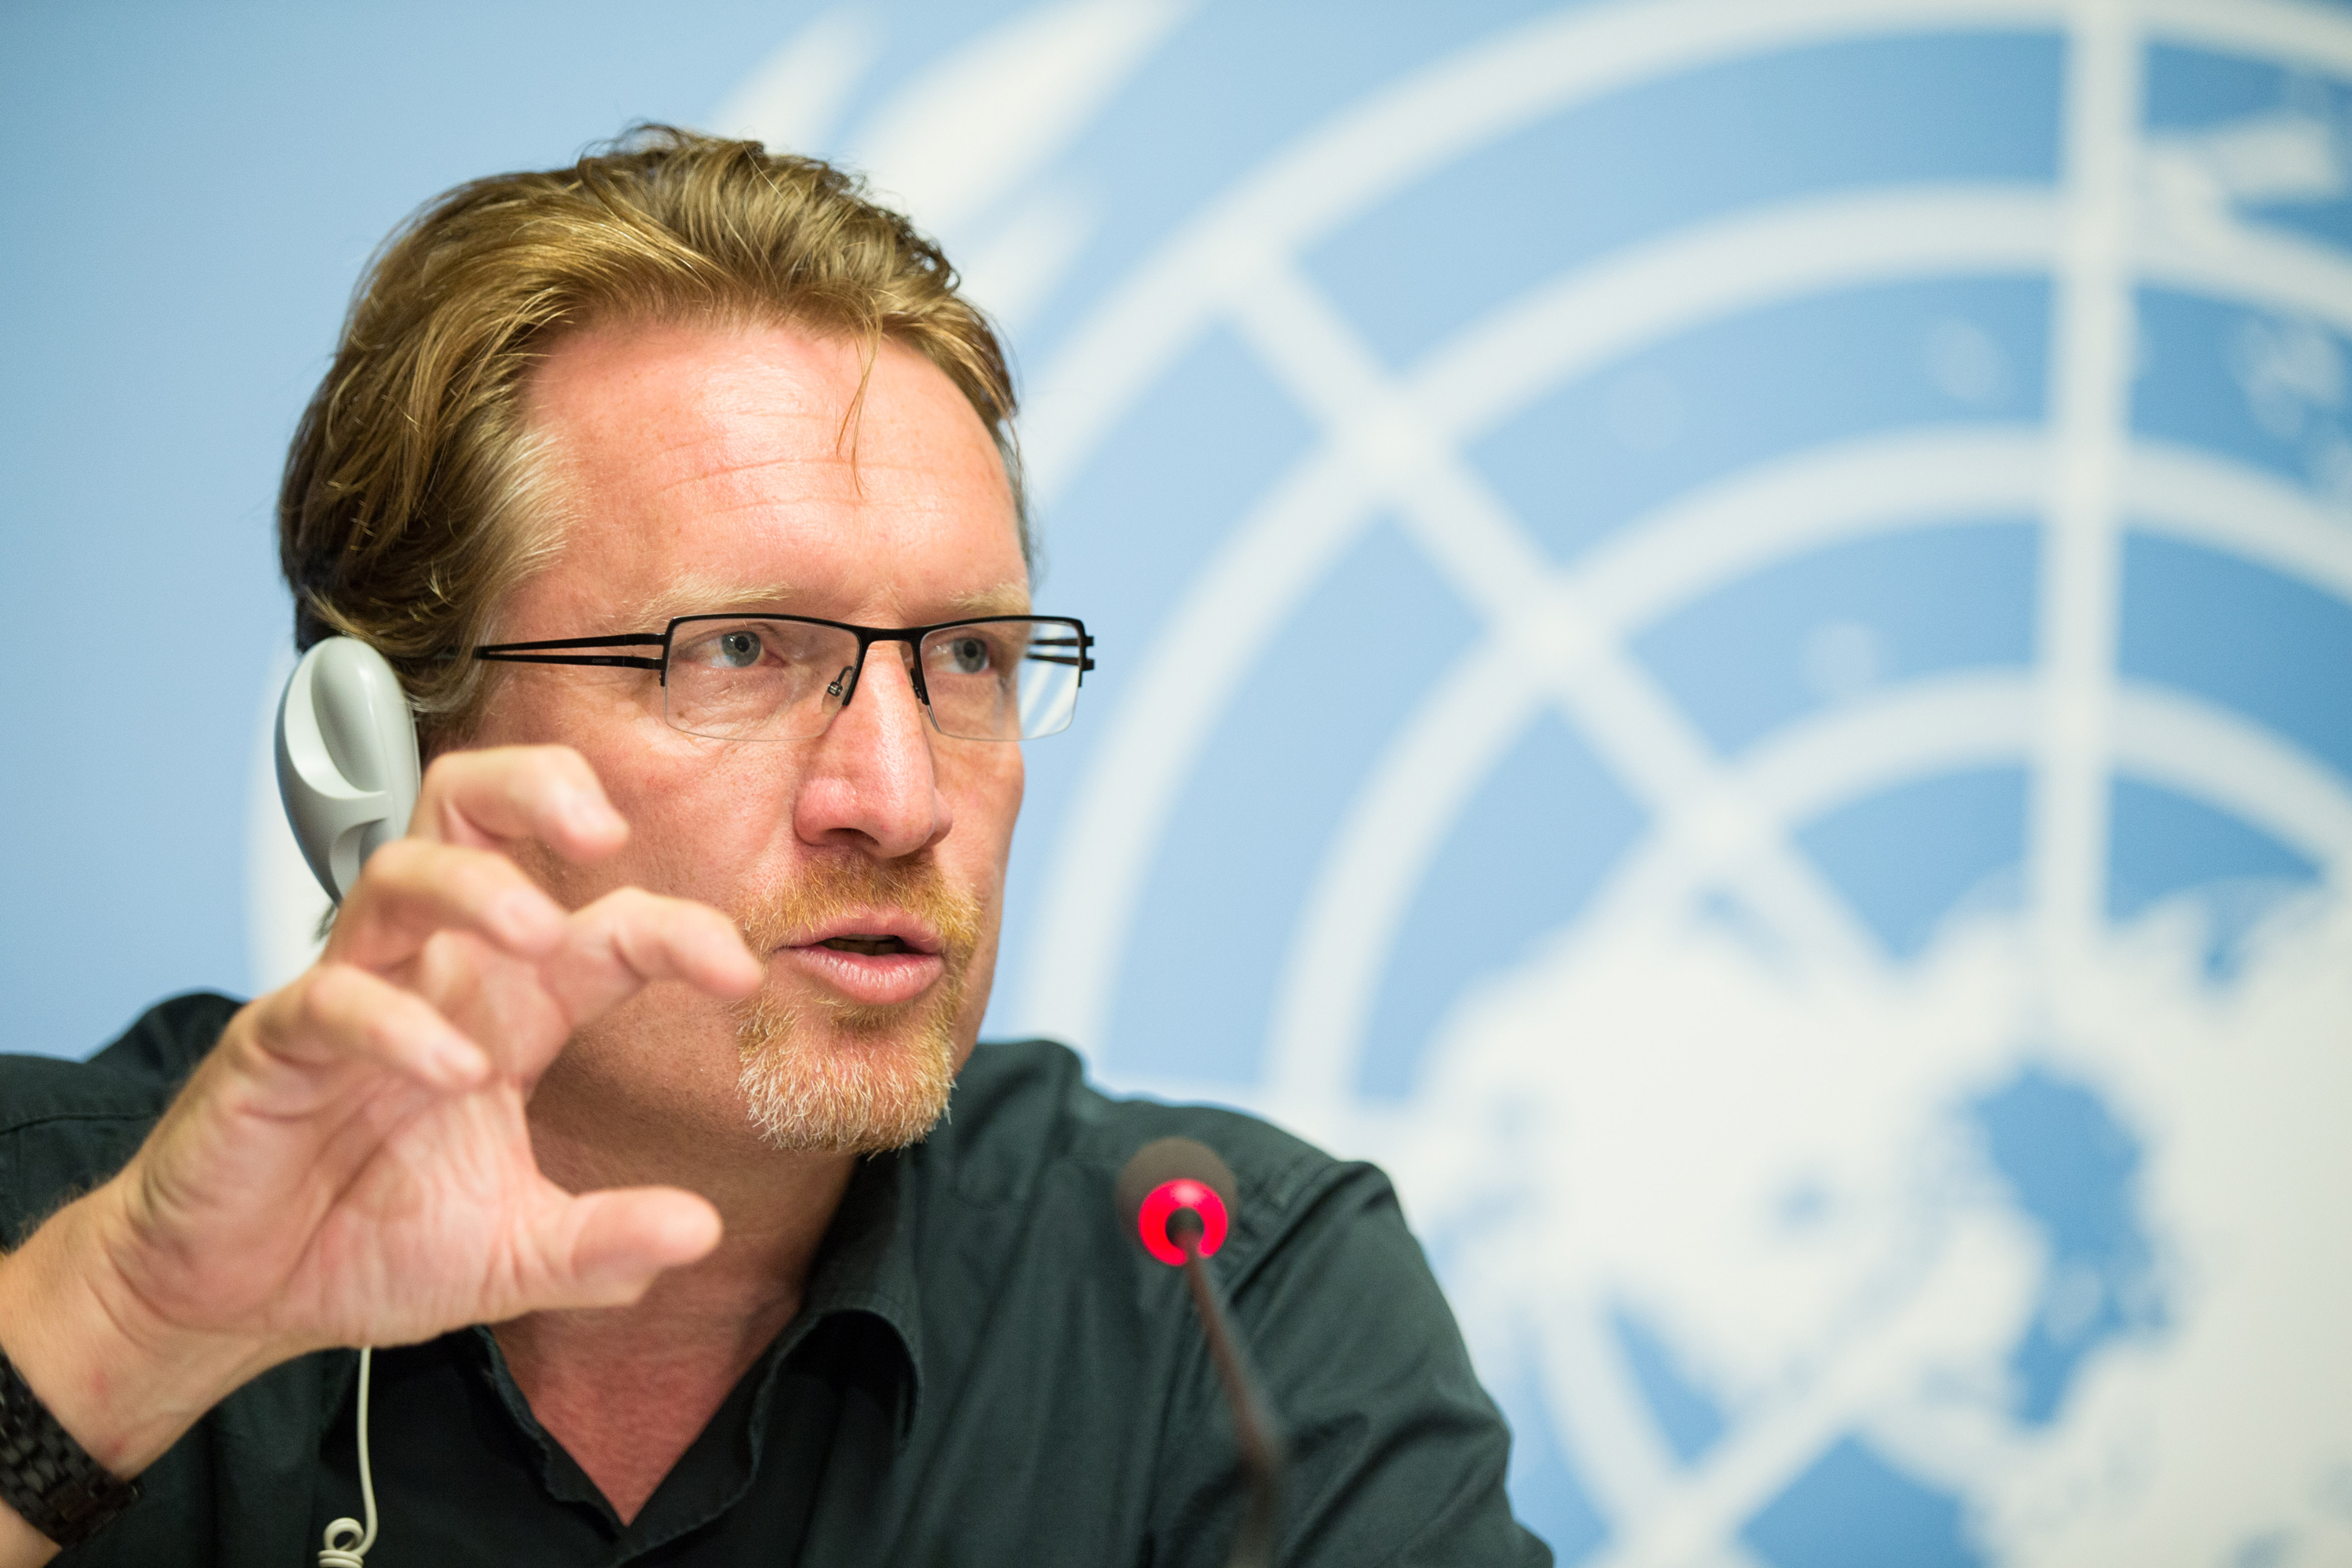 Christian Lindmeier attends a press conference in Geneva, Switzerland on June 16, 2015.